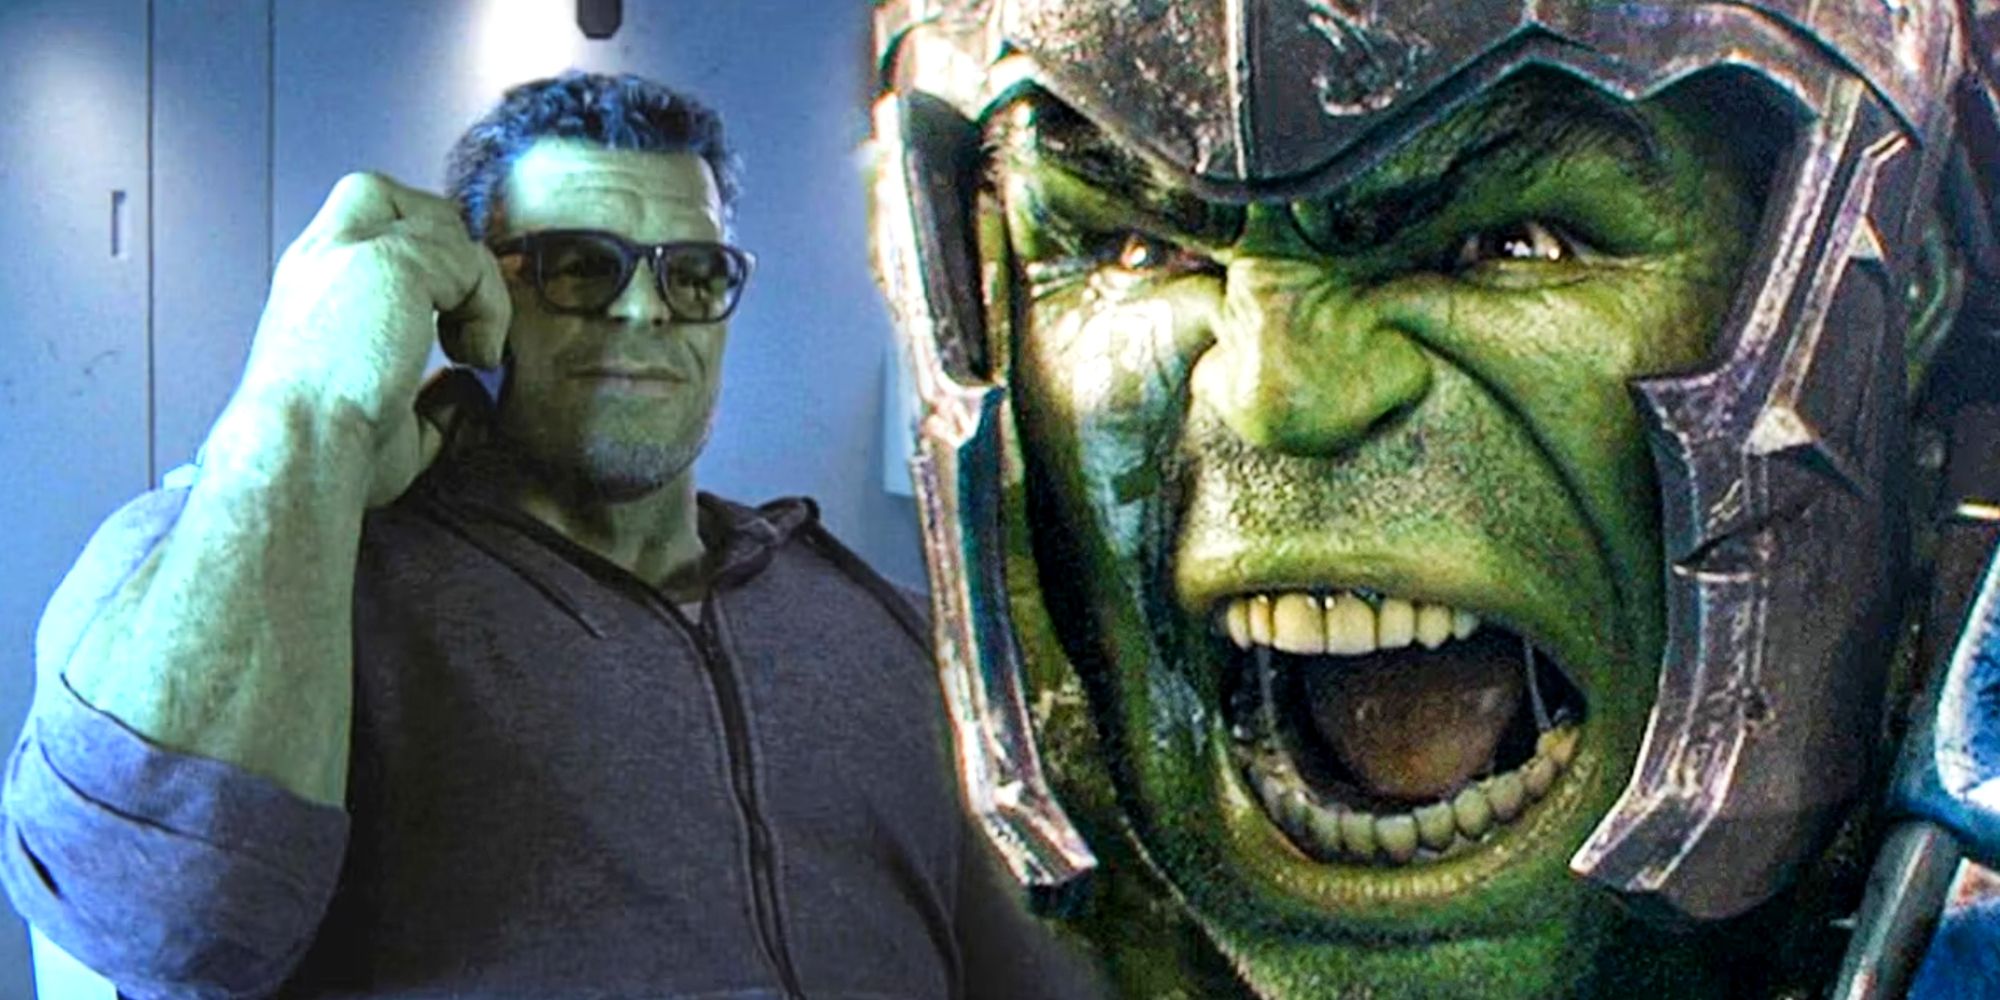 Guy on X: Next Hulk Movie WORLD WAR HULK come before She Hulk Tv